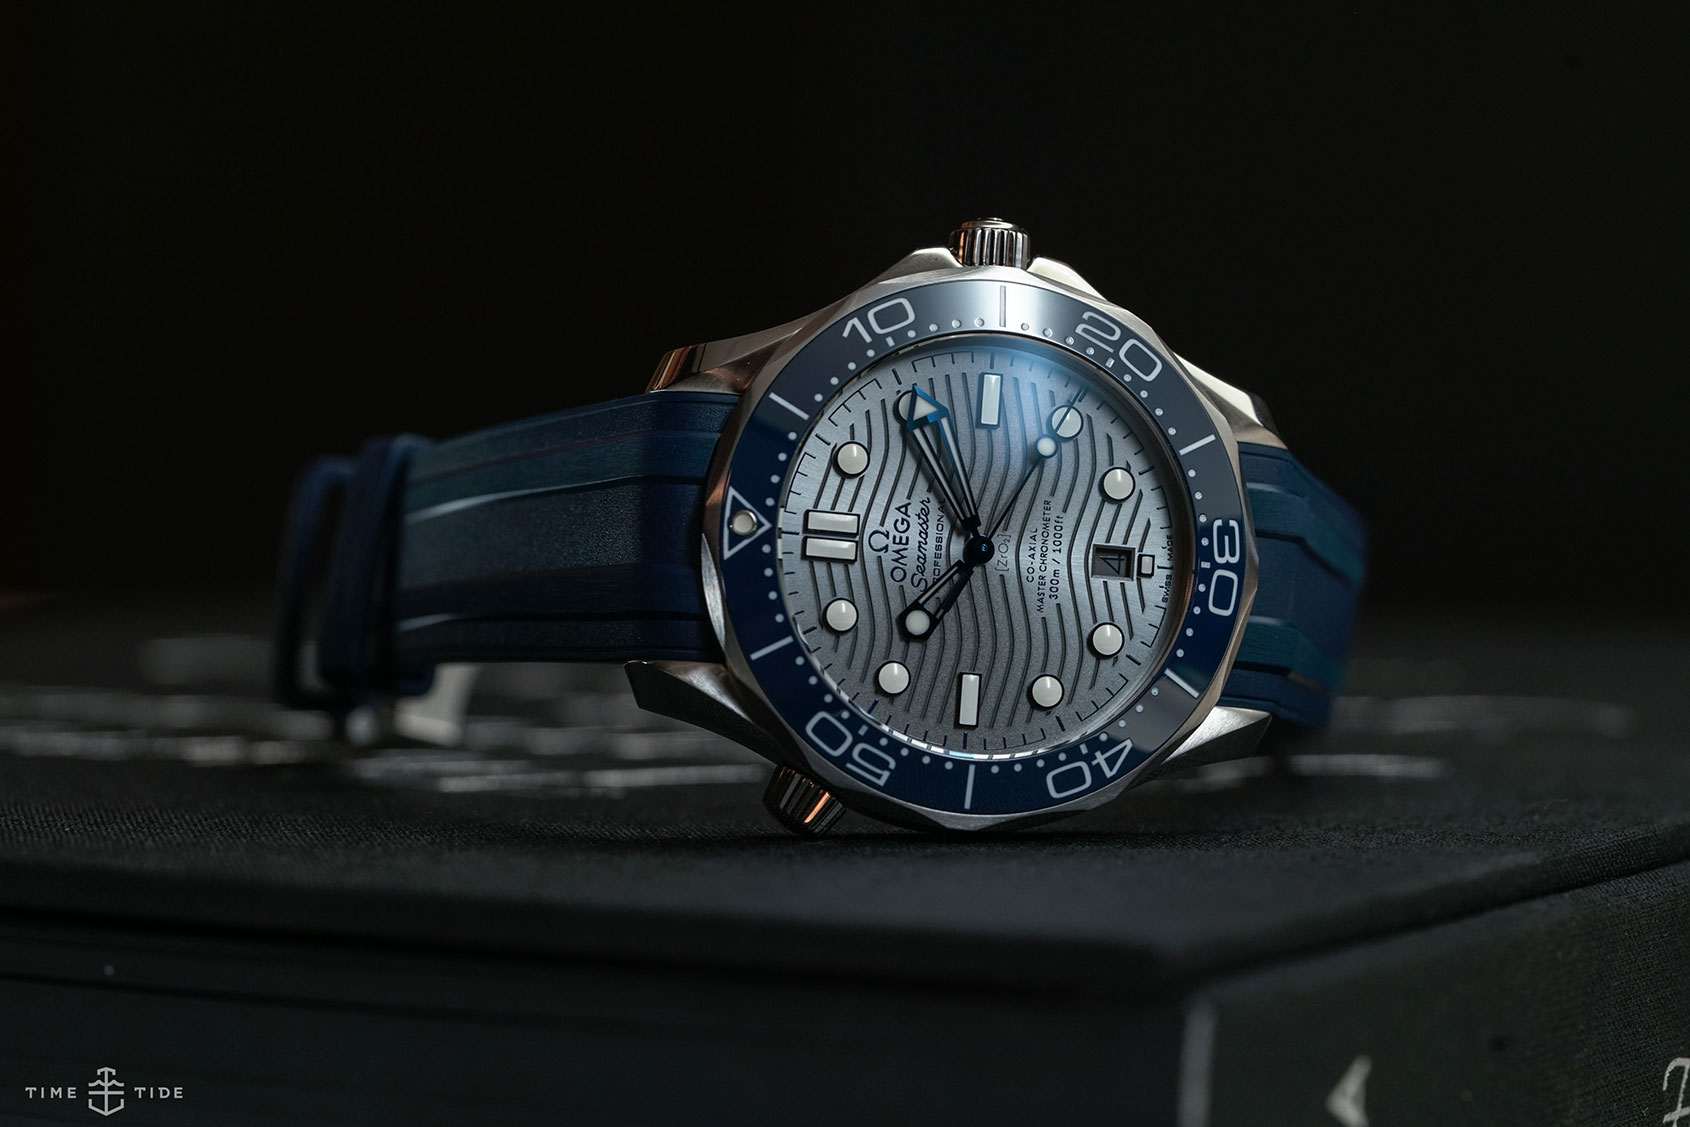 best looking omega watch